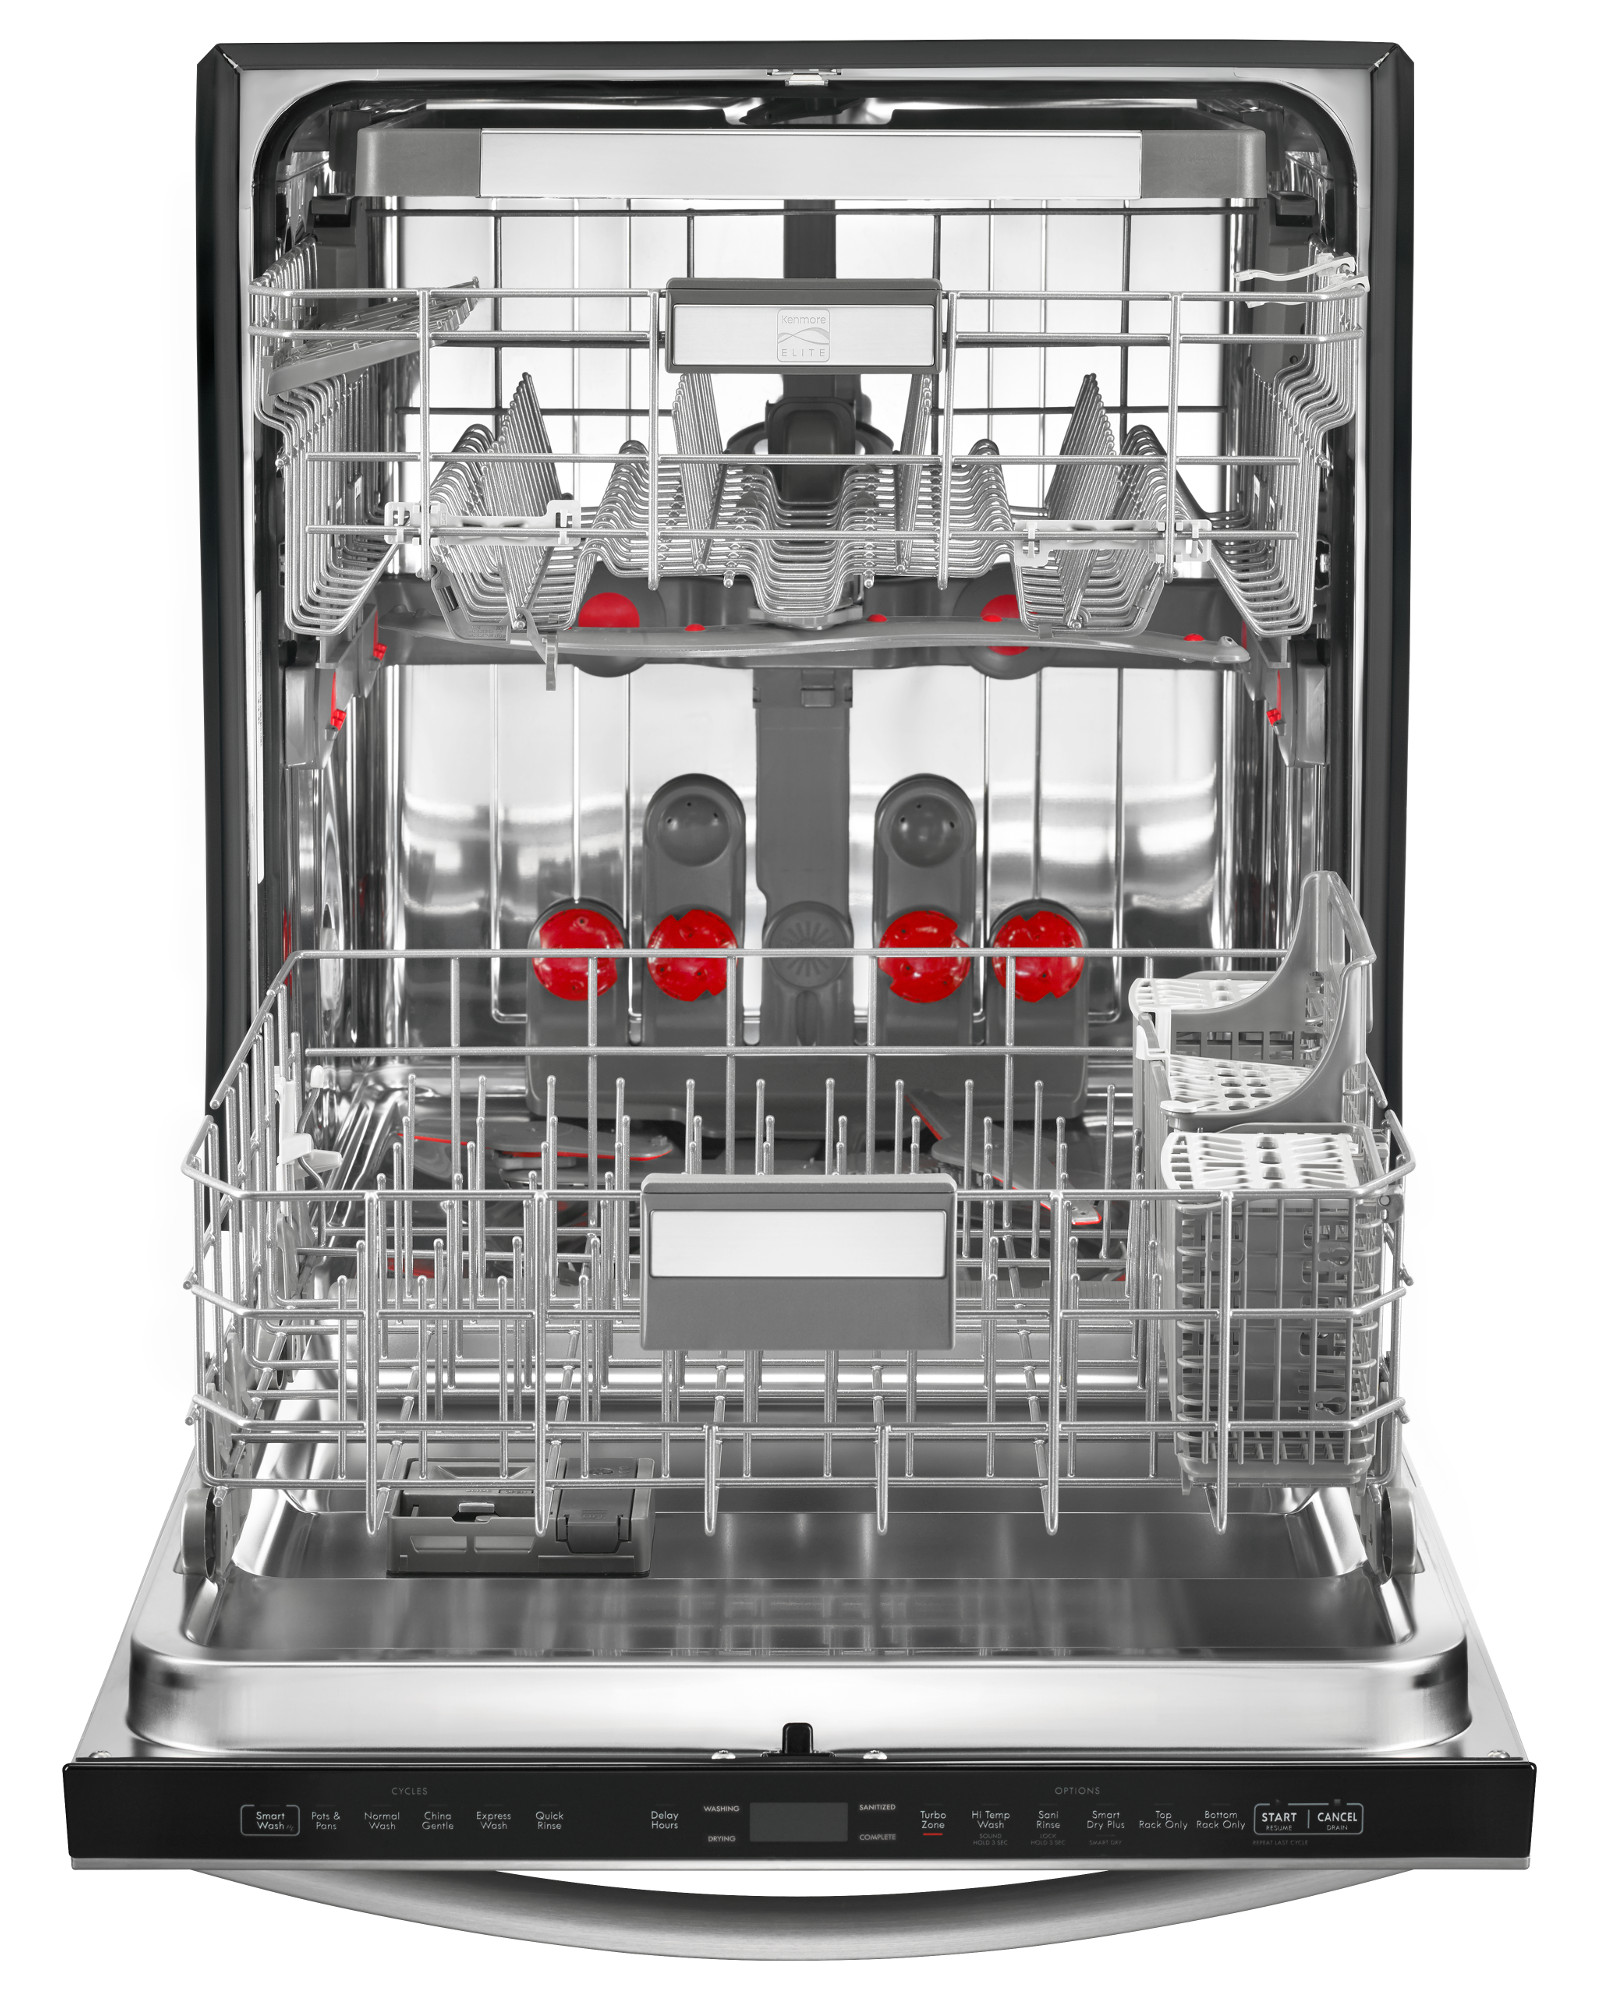 kenmore elite dishwasher dimensions